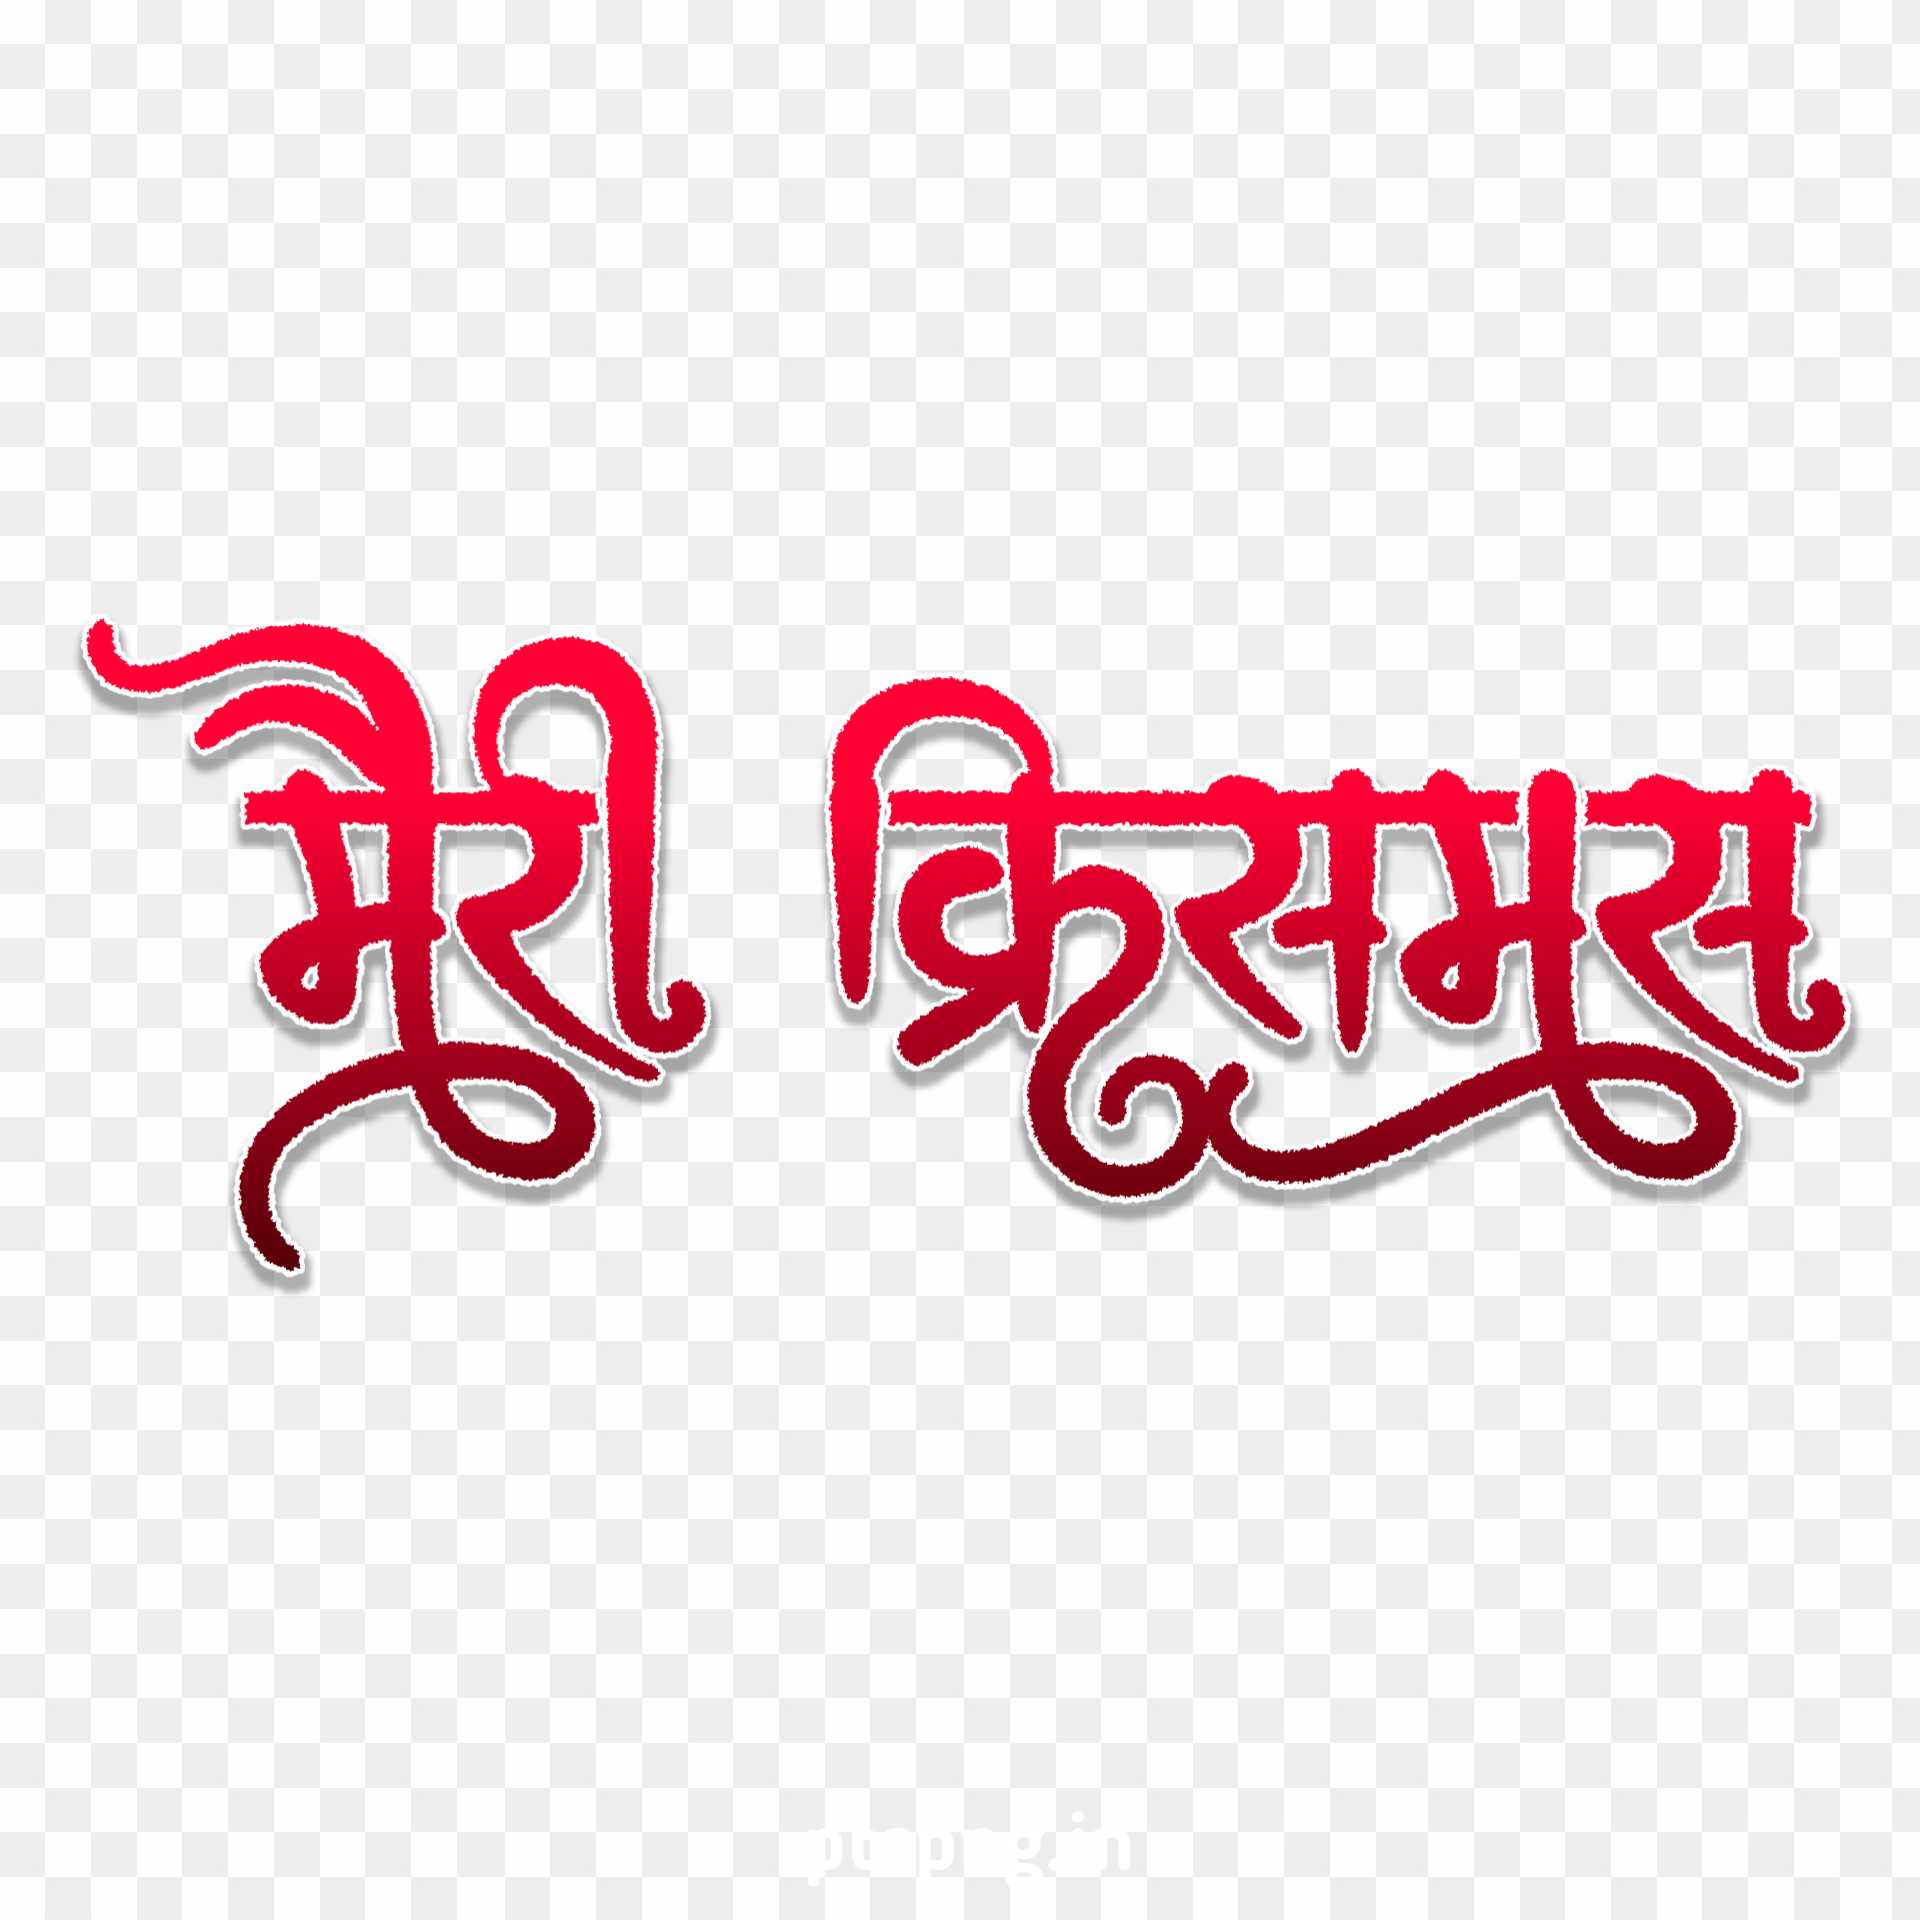 Christmas day hindi text PNG images